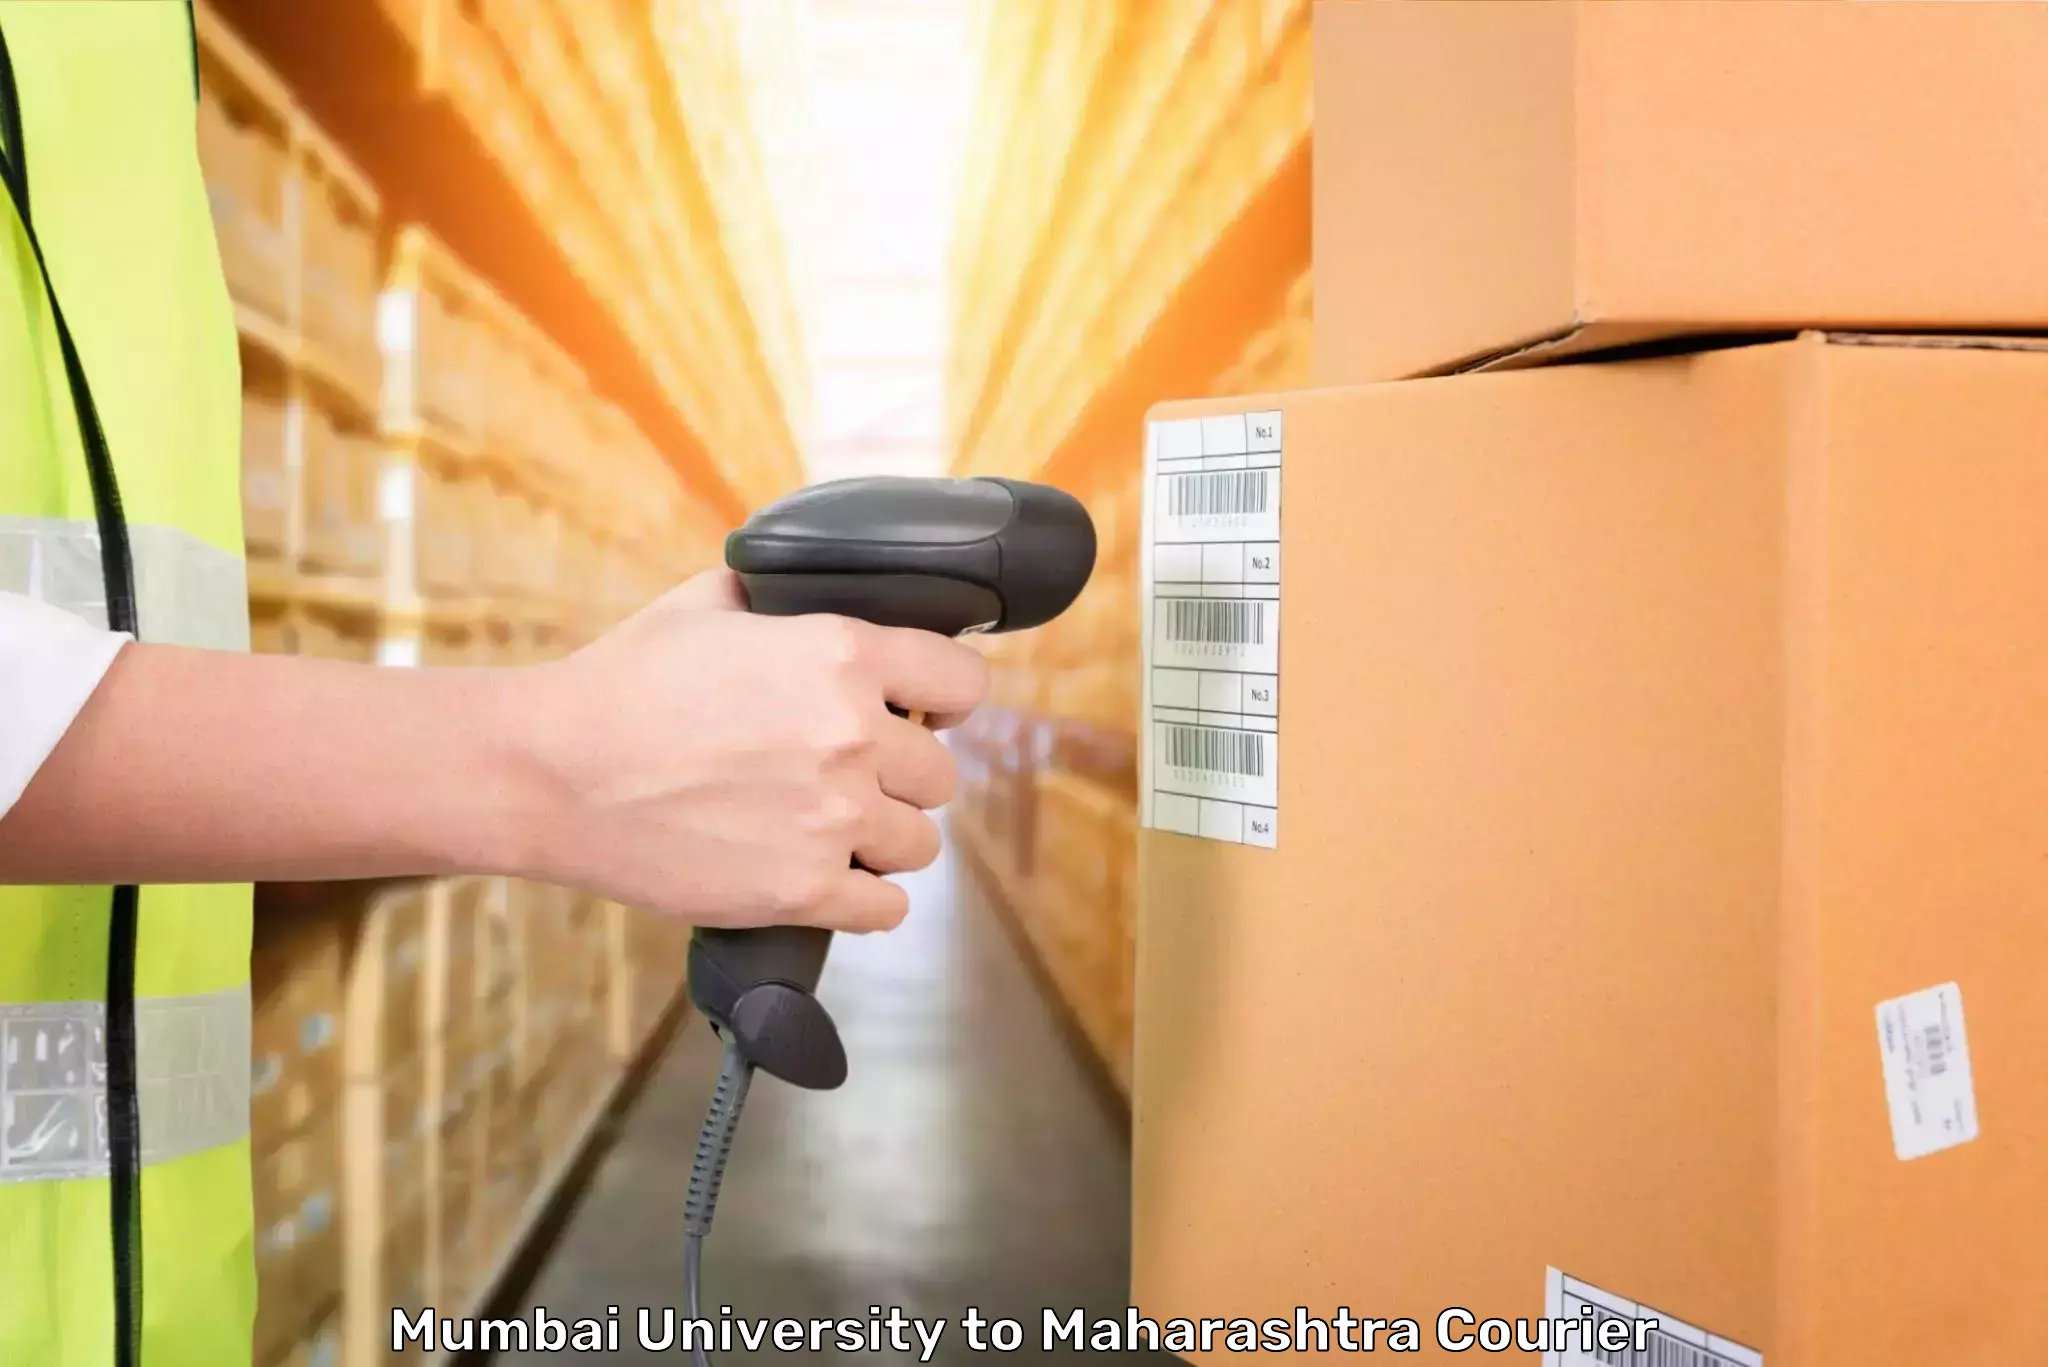 Baggage shipping experience Mumbai University to Dadar